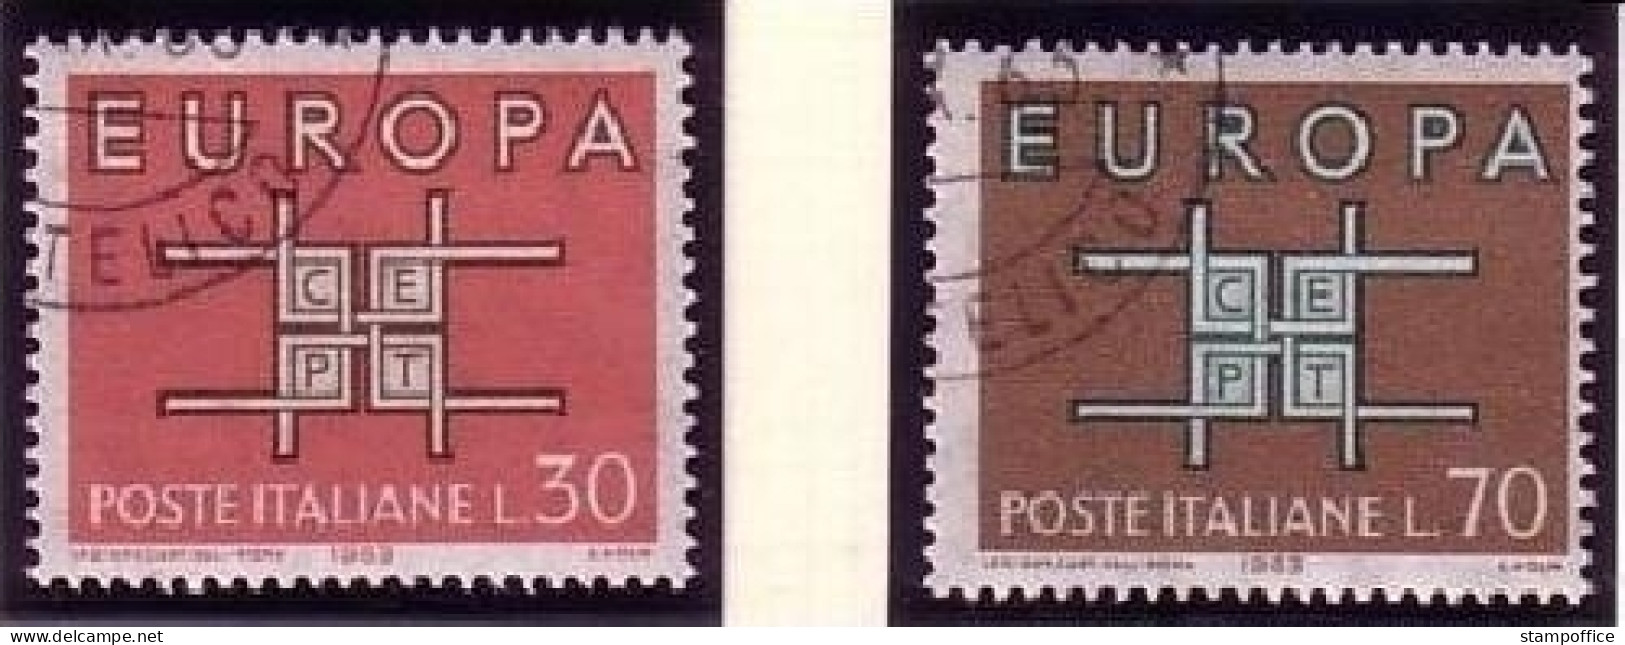 ITALIEN MI-NR. 1149-1150 GESTEMPELT(USED) EUROPA 1963 - 1963